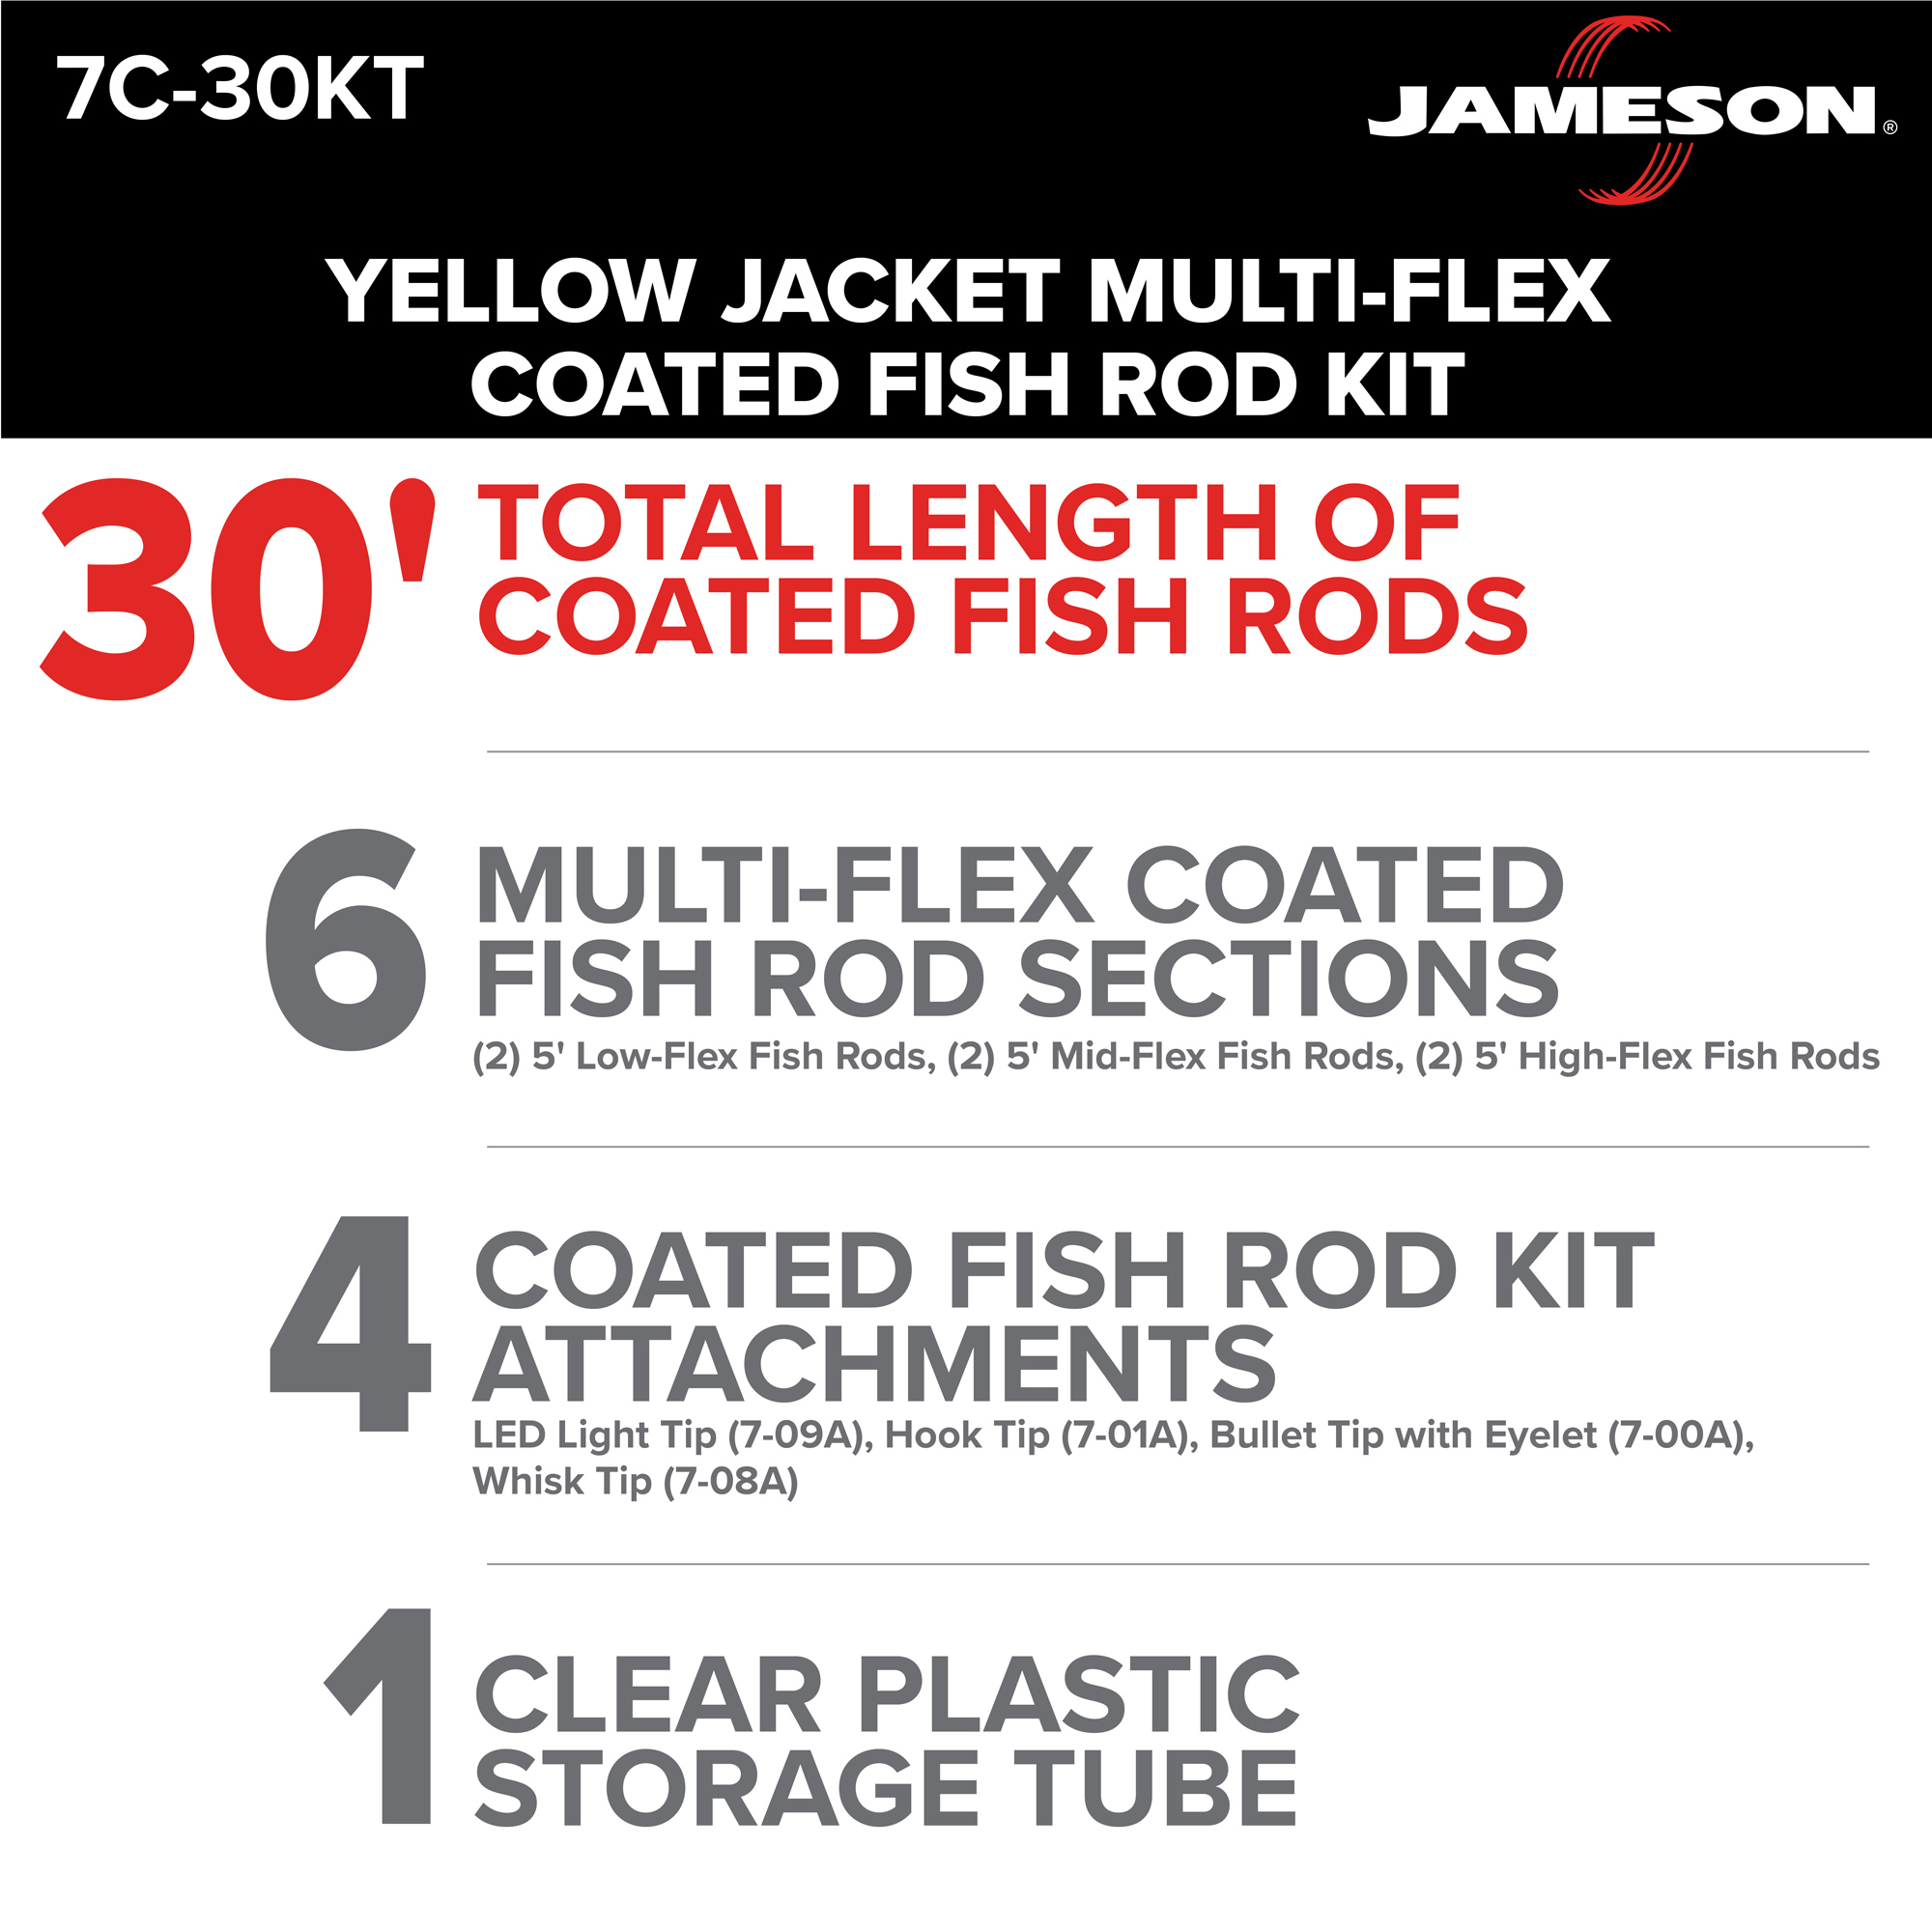 Yellow Jacket Coated Fish Rod Kit, 30' Multi-Flex, Jameson Tools